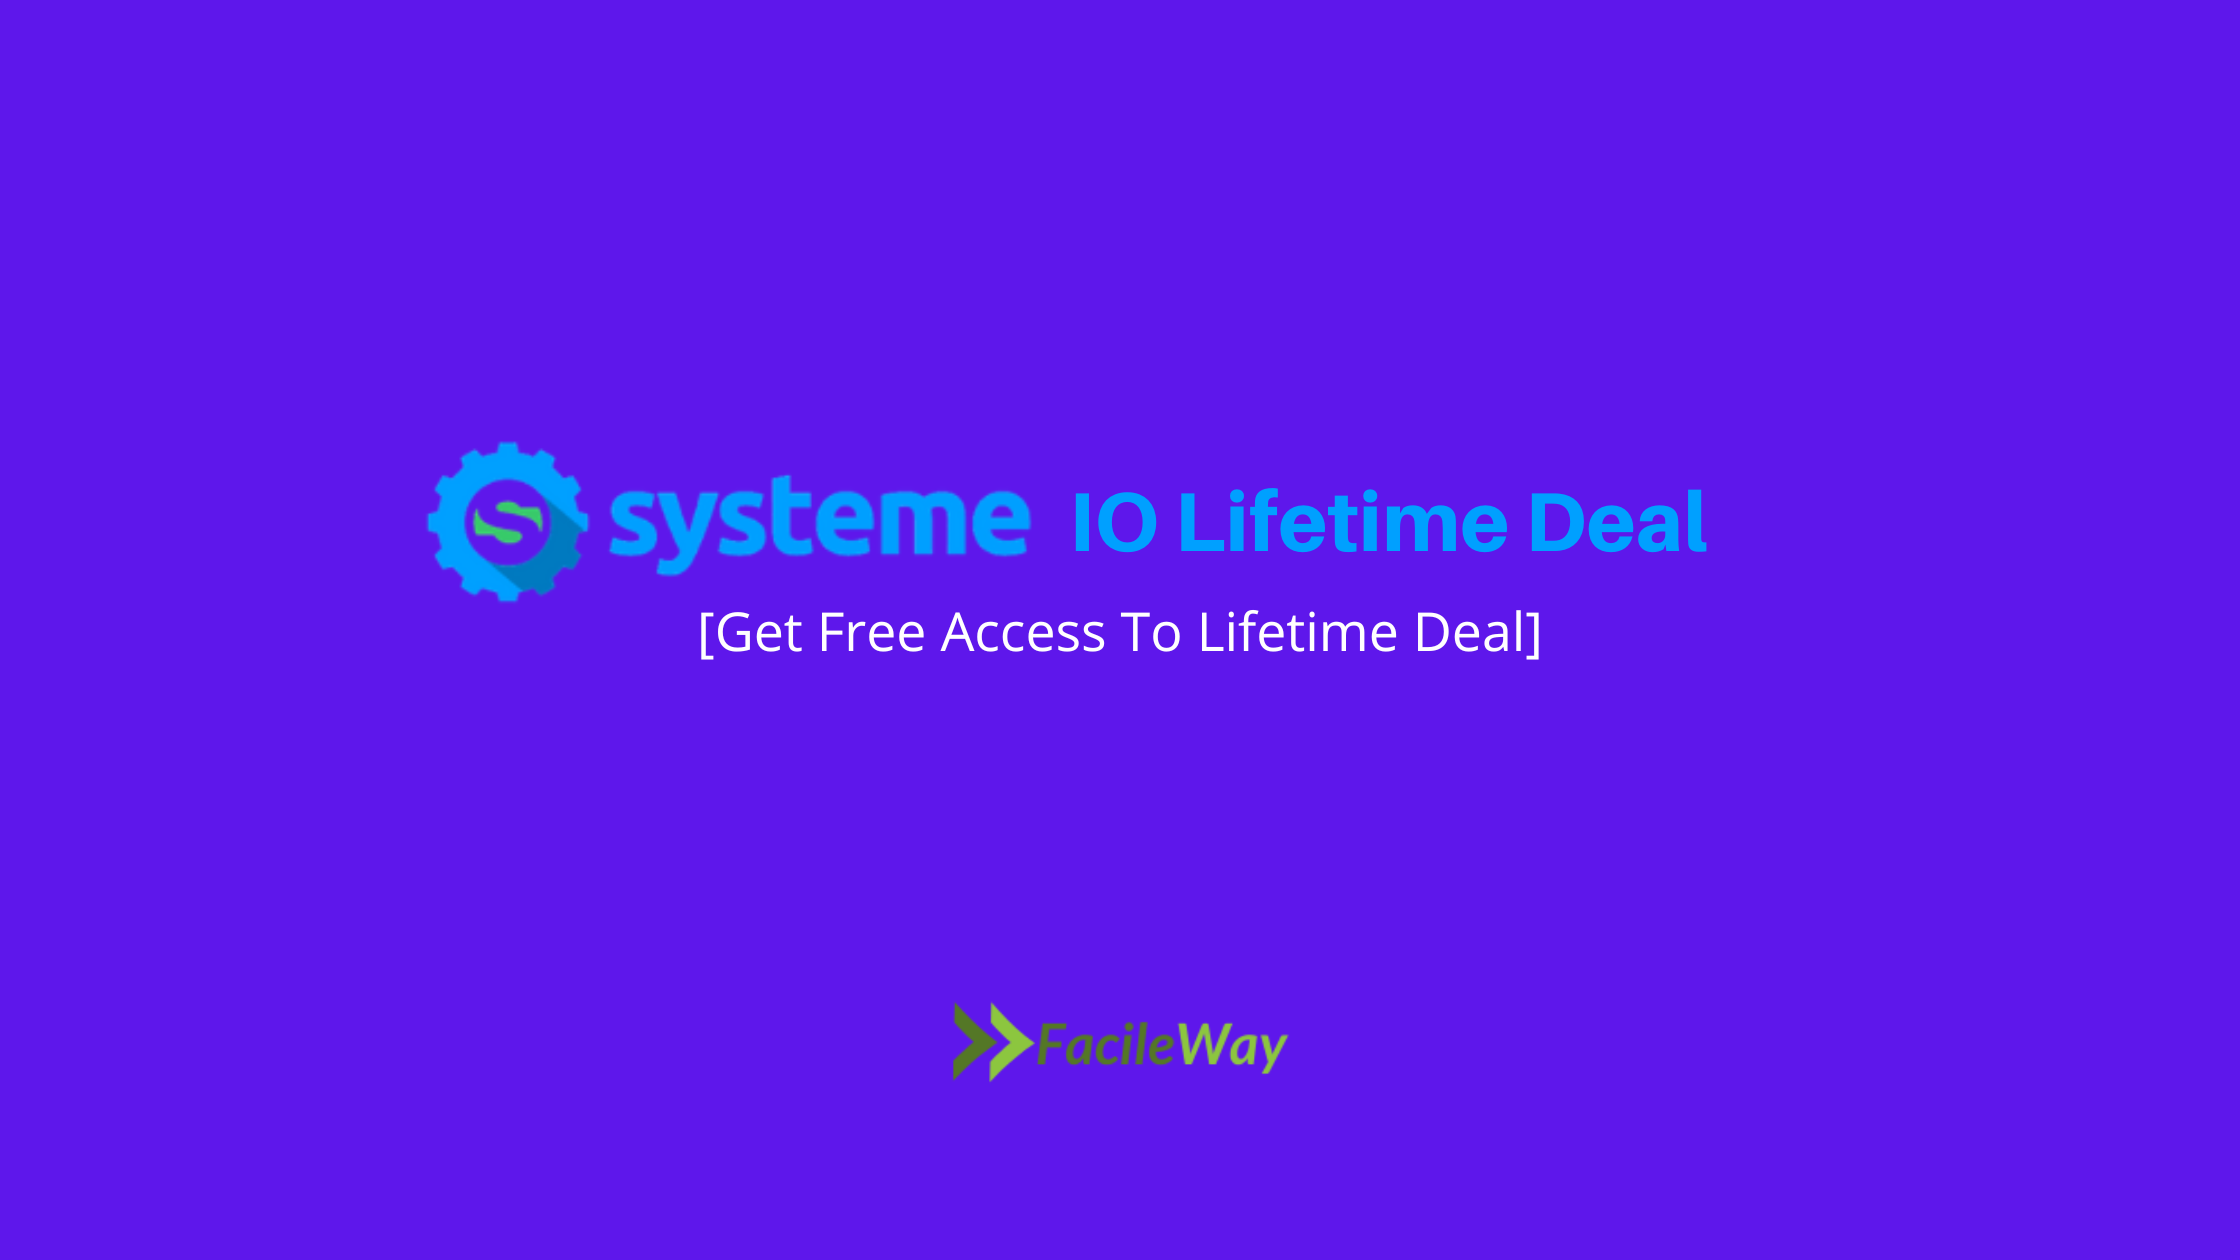 Systeme.io lifetime deal